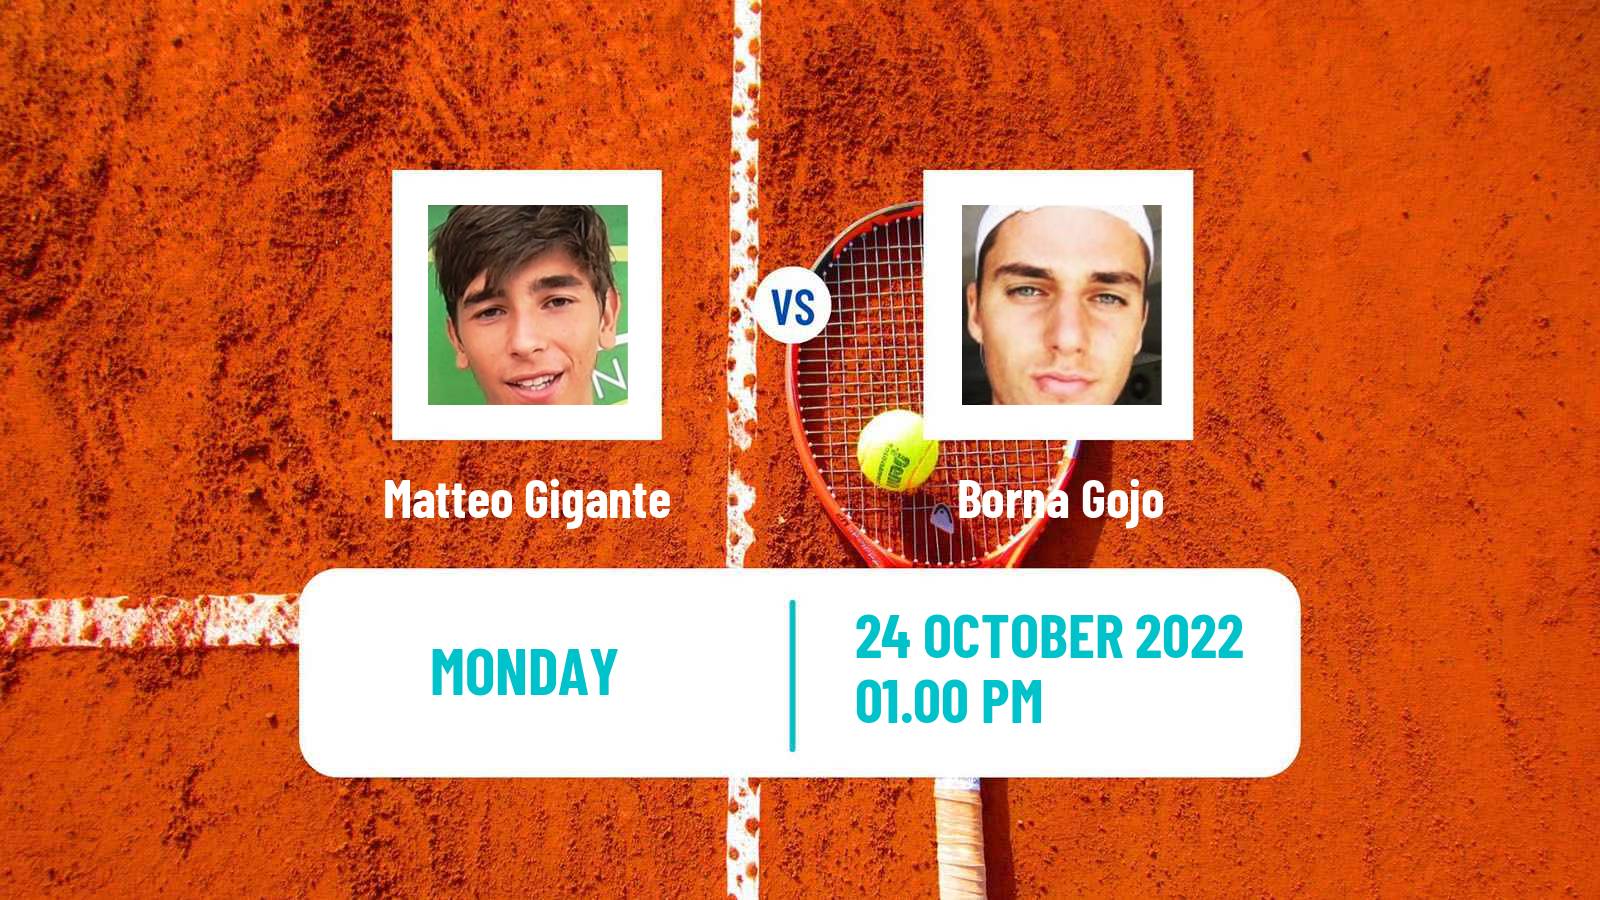 Tennis ATP Challenger Matteo Gigante - Borna Gojo